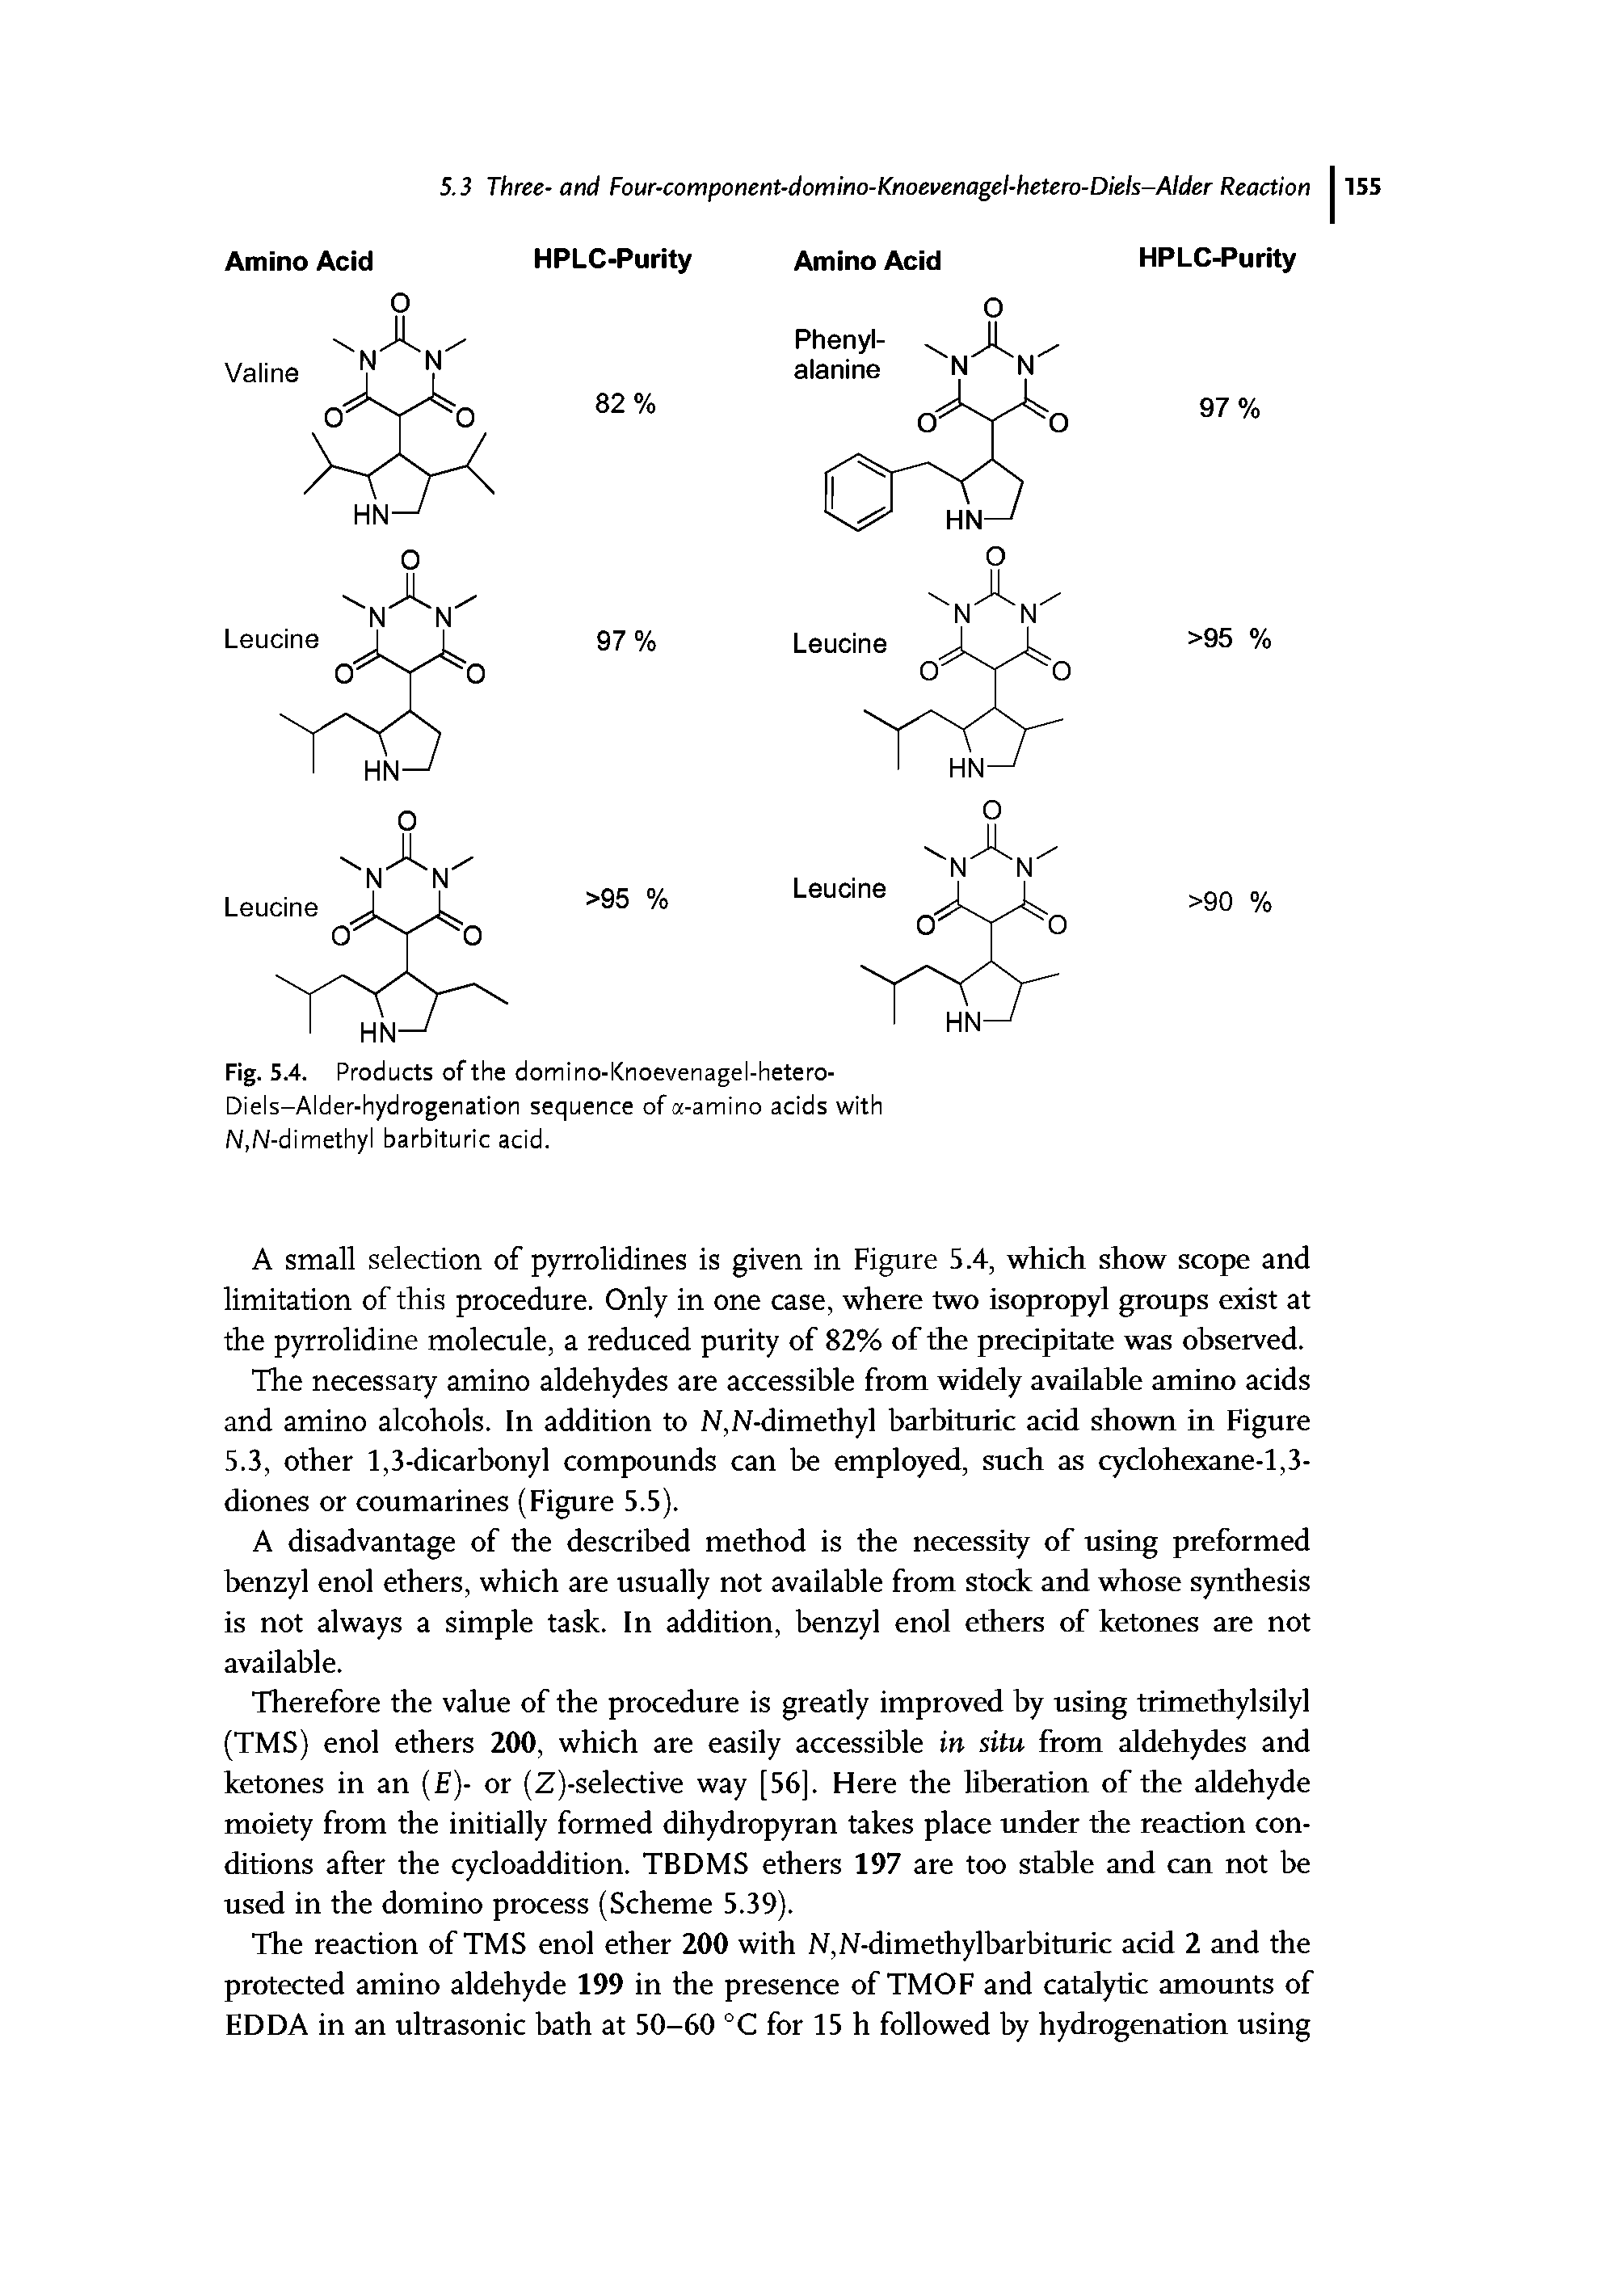 Fig. 5.4. Products of the domino-Knoevenagel-hetero-Diels-Alder-hydrogenation sequence of a-amino acids with N,N-dimethyl barbituric acid.